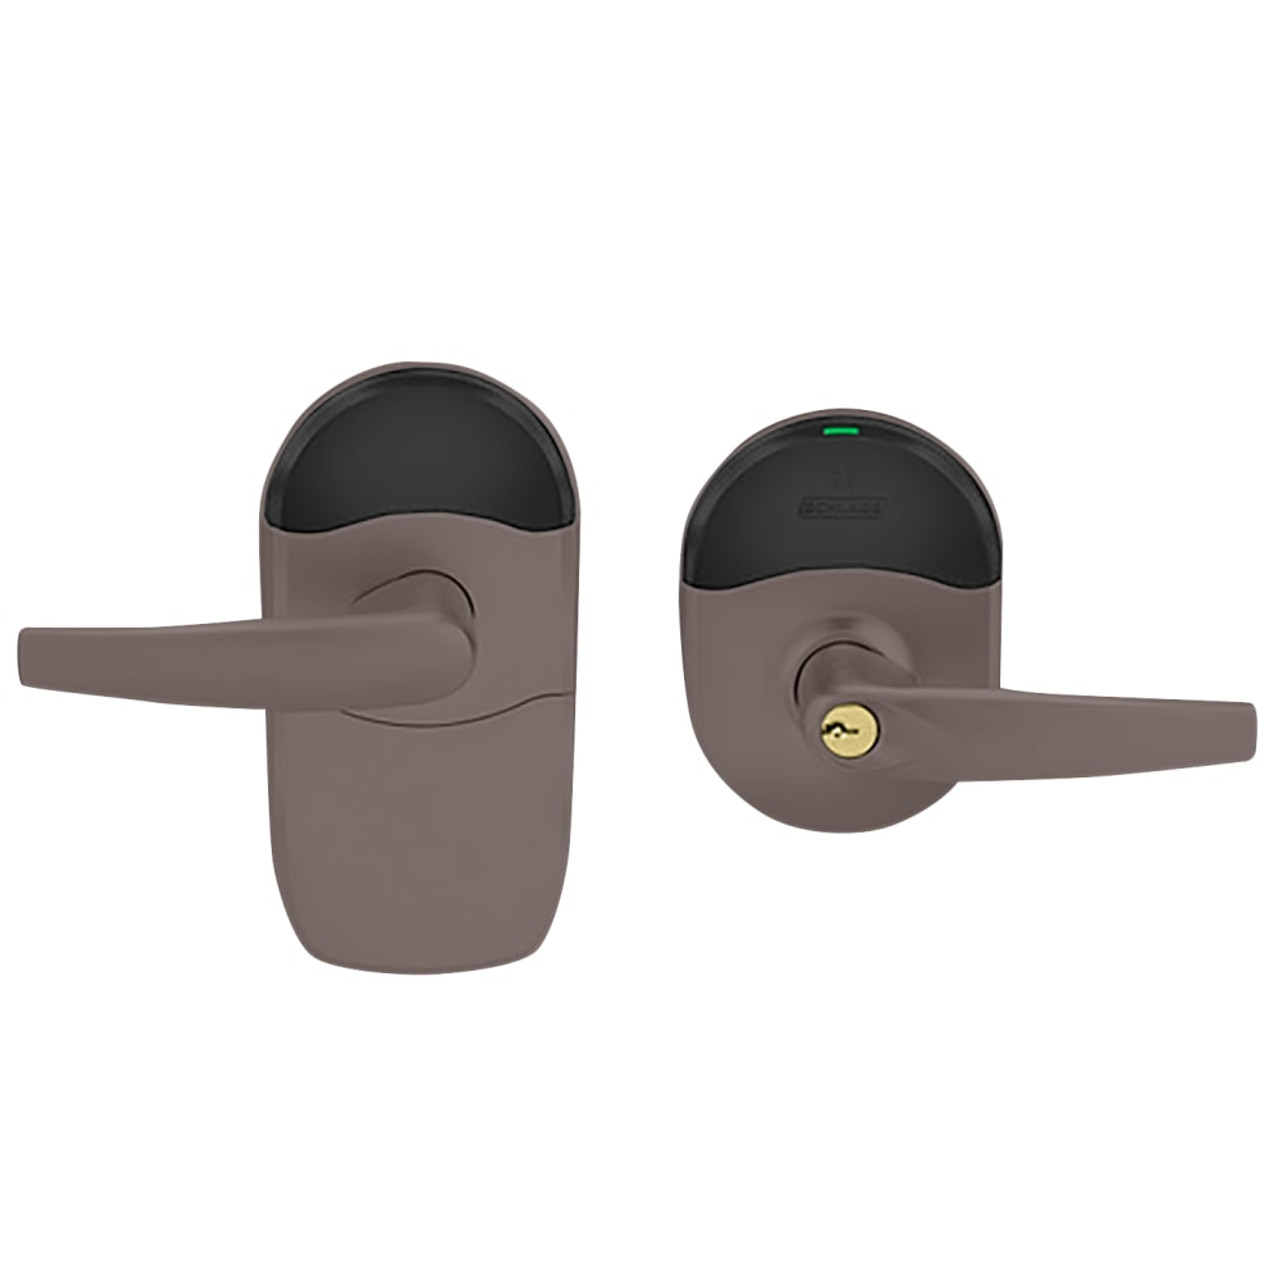 Schlage Lock NDE NDA Series Wireless Lock User Manual Users Manaul